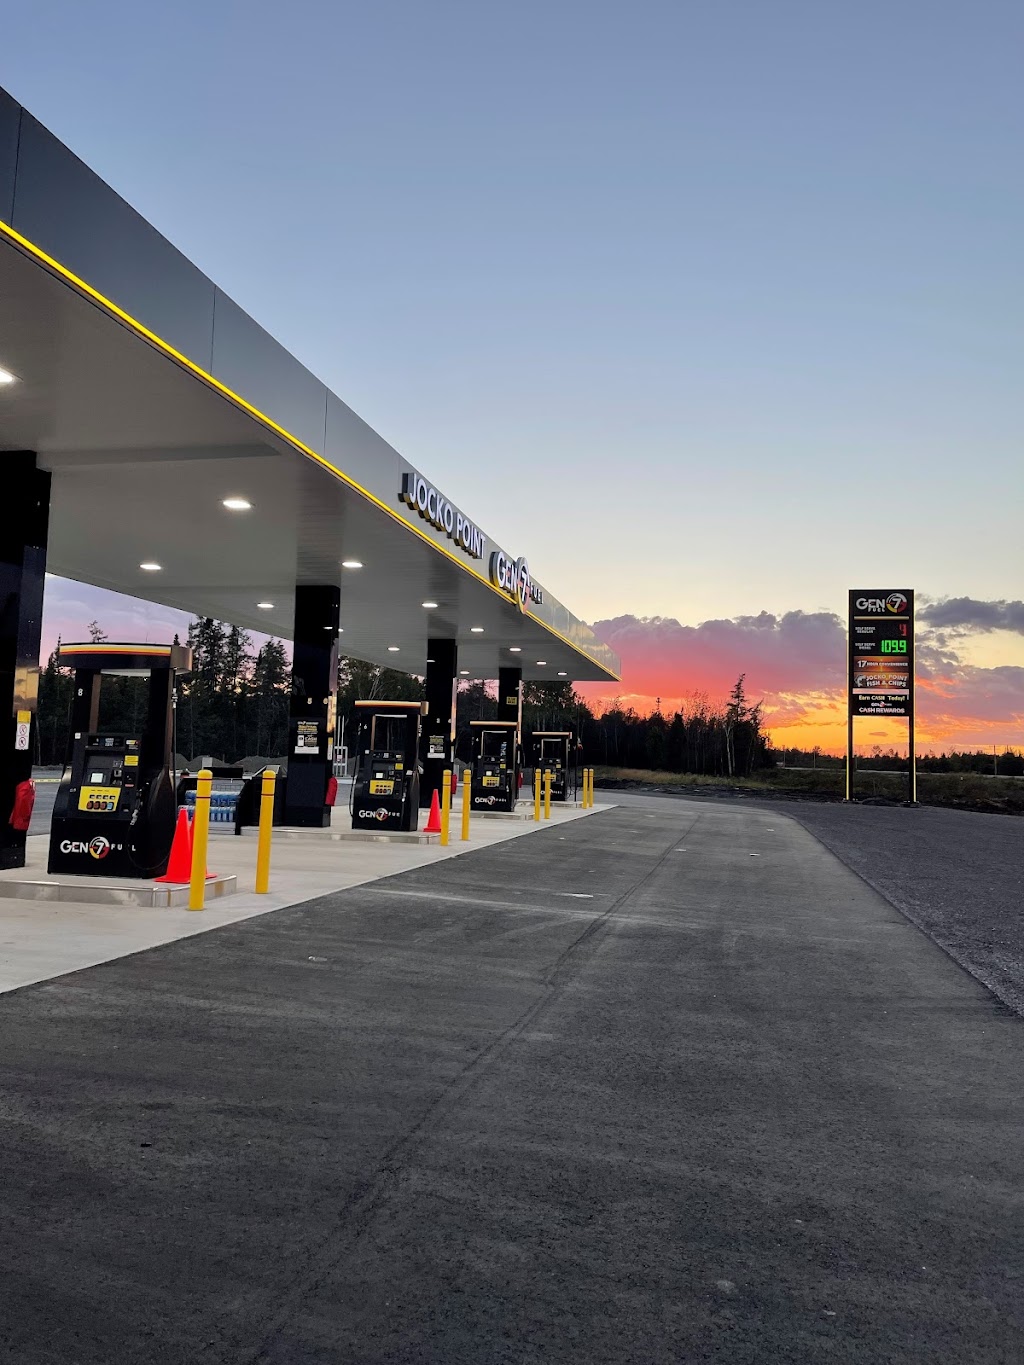 Jocko Point Gen7 Fuel | gas station | 1Jocko, Point Road, North Bay, ON P1B 8G5, Canada | 7054916950 OR +1 705-491-6950